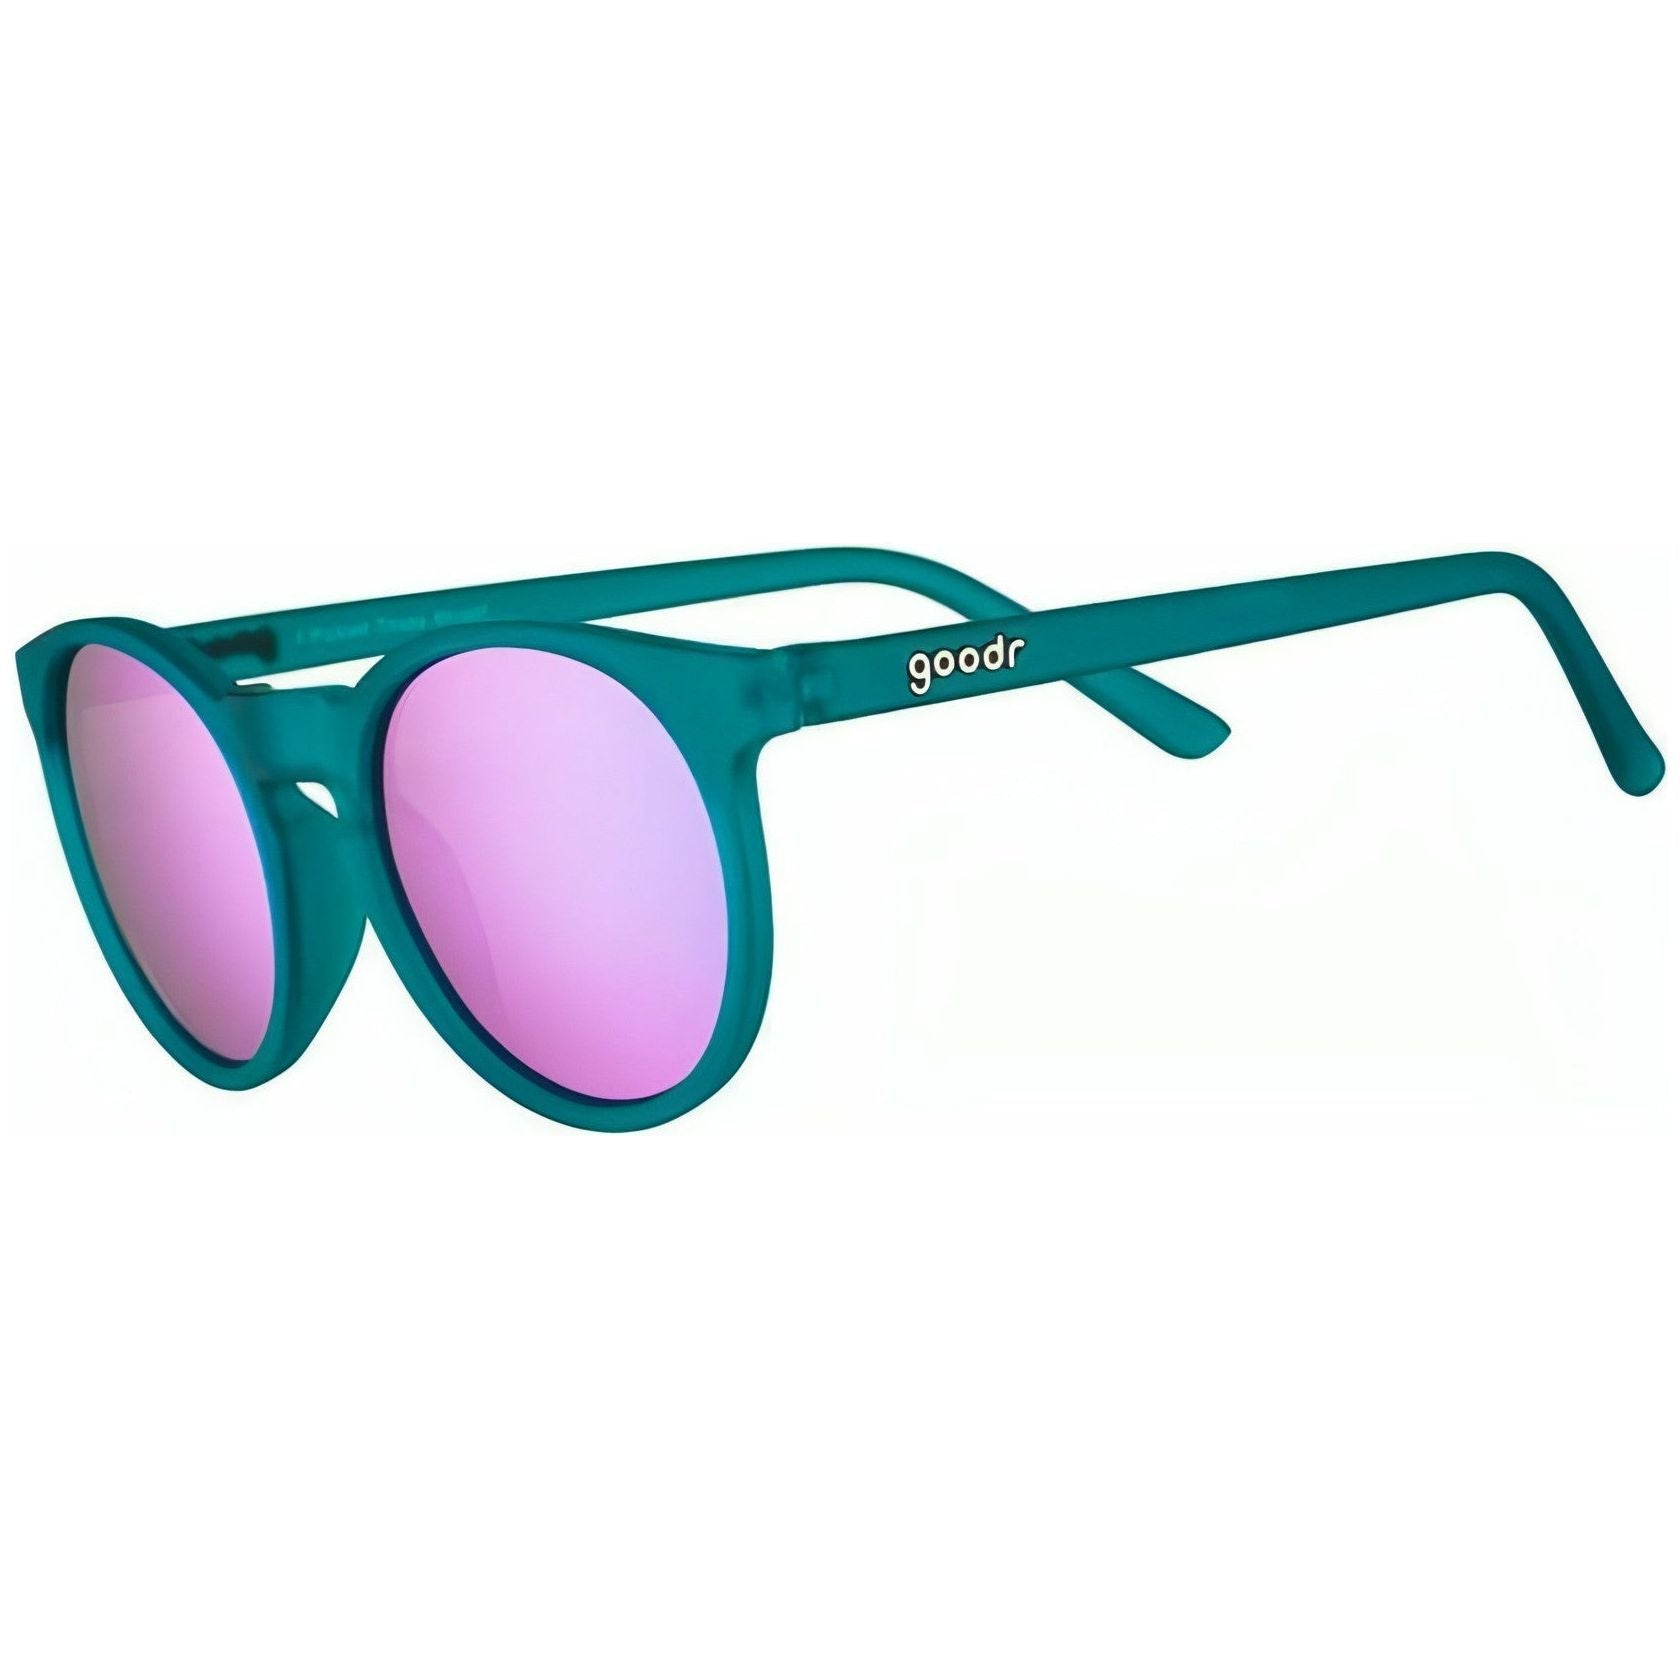 Goodr Circle G Sunglasses - I Pickled These Myself